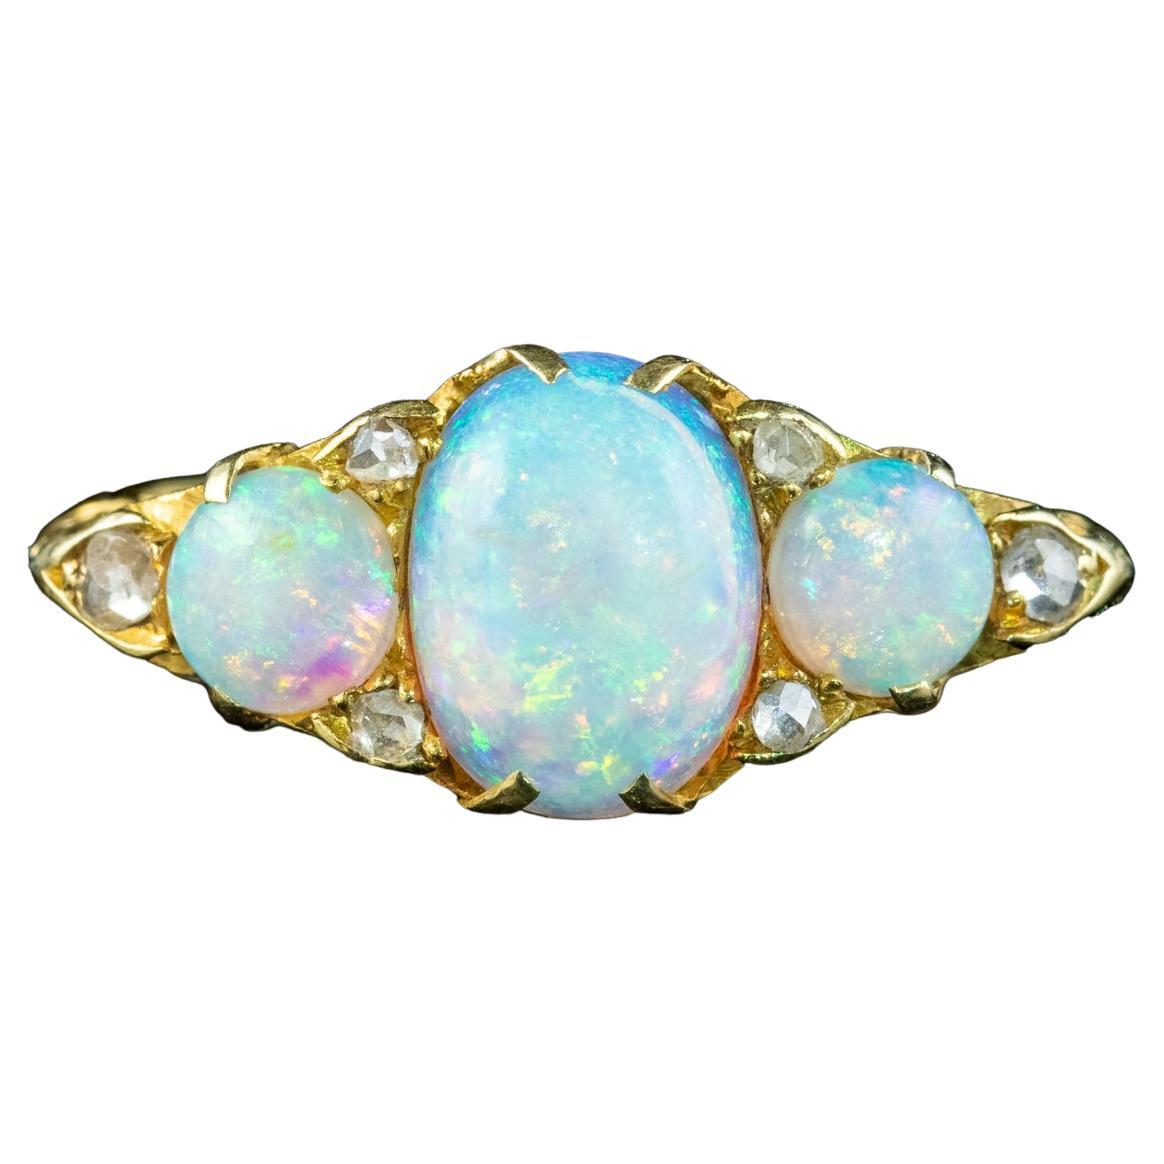 Antique Edwardian Opal Diamond Ring 2.5ct of Opal